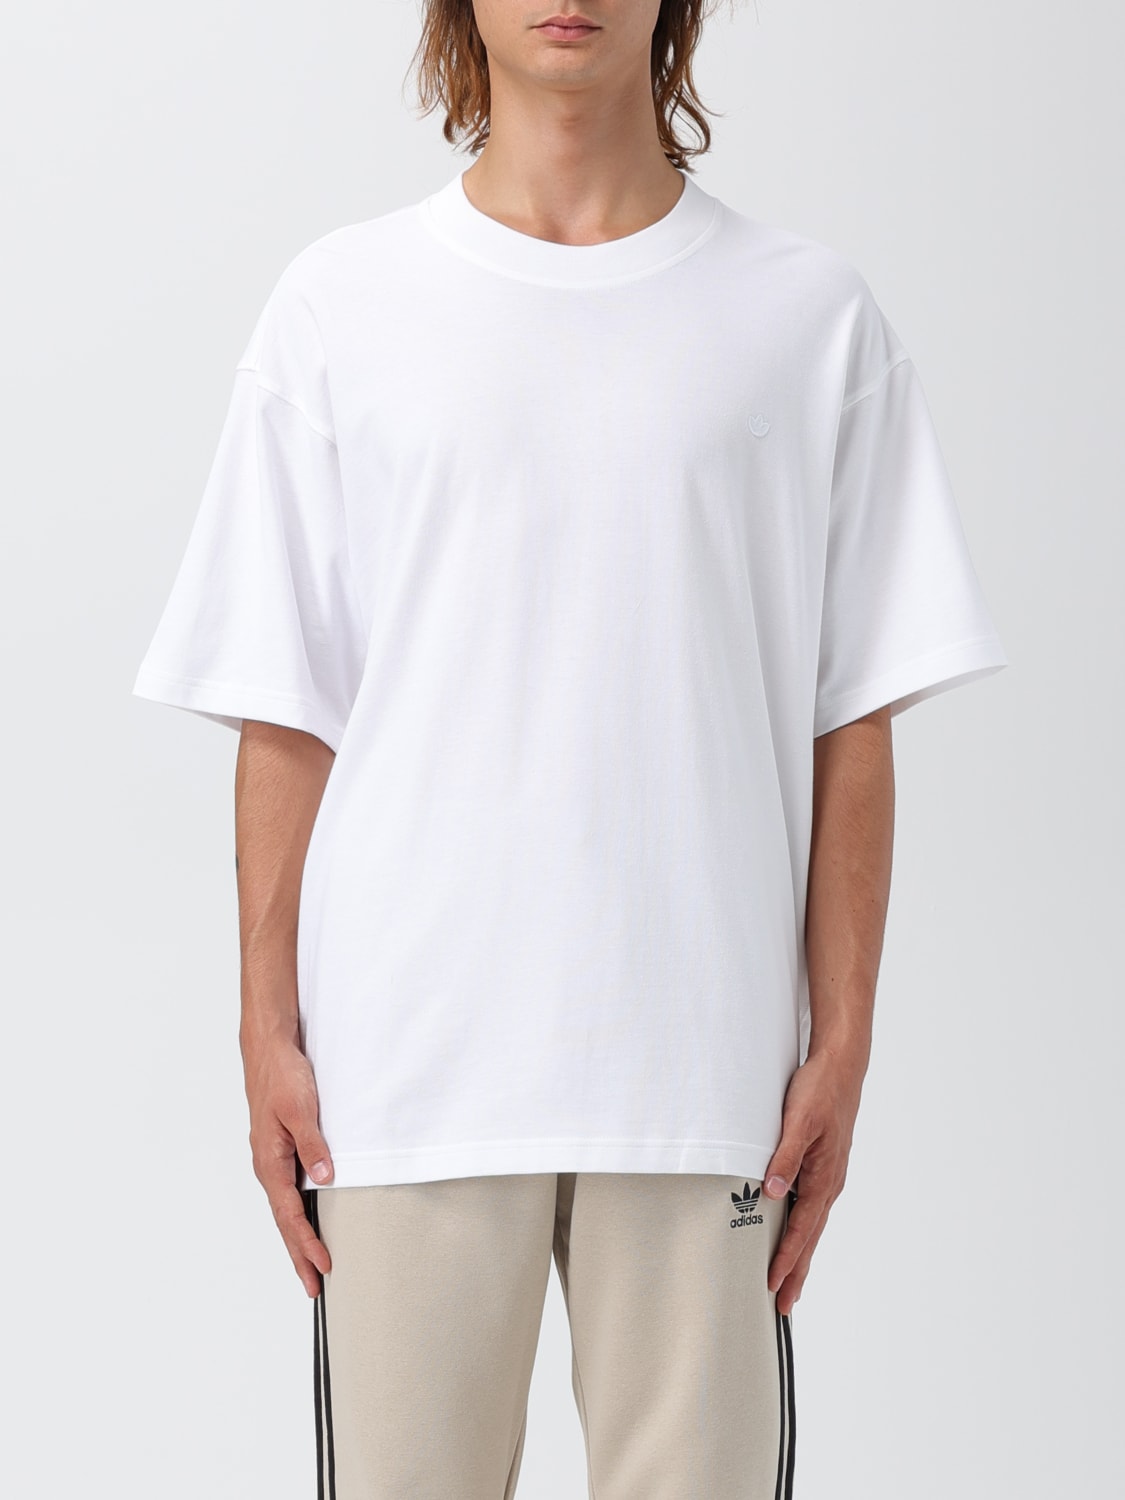 ORIGINALS: t-shirt Adidas online at logo White t- Originals | cotton ADIDAS shirt - with IM4388